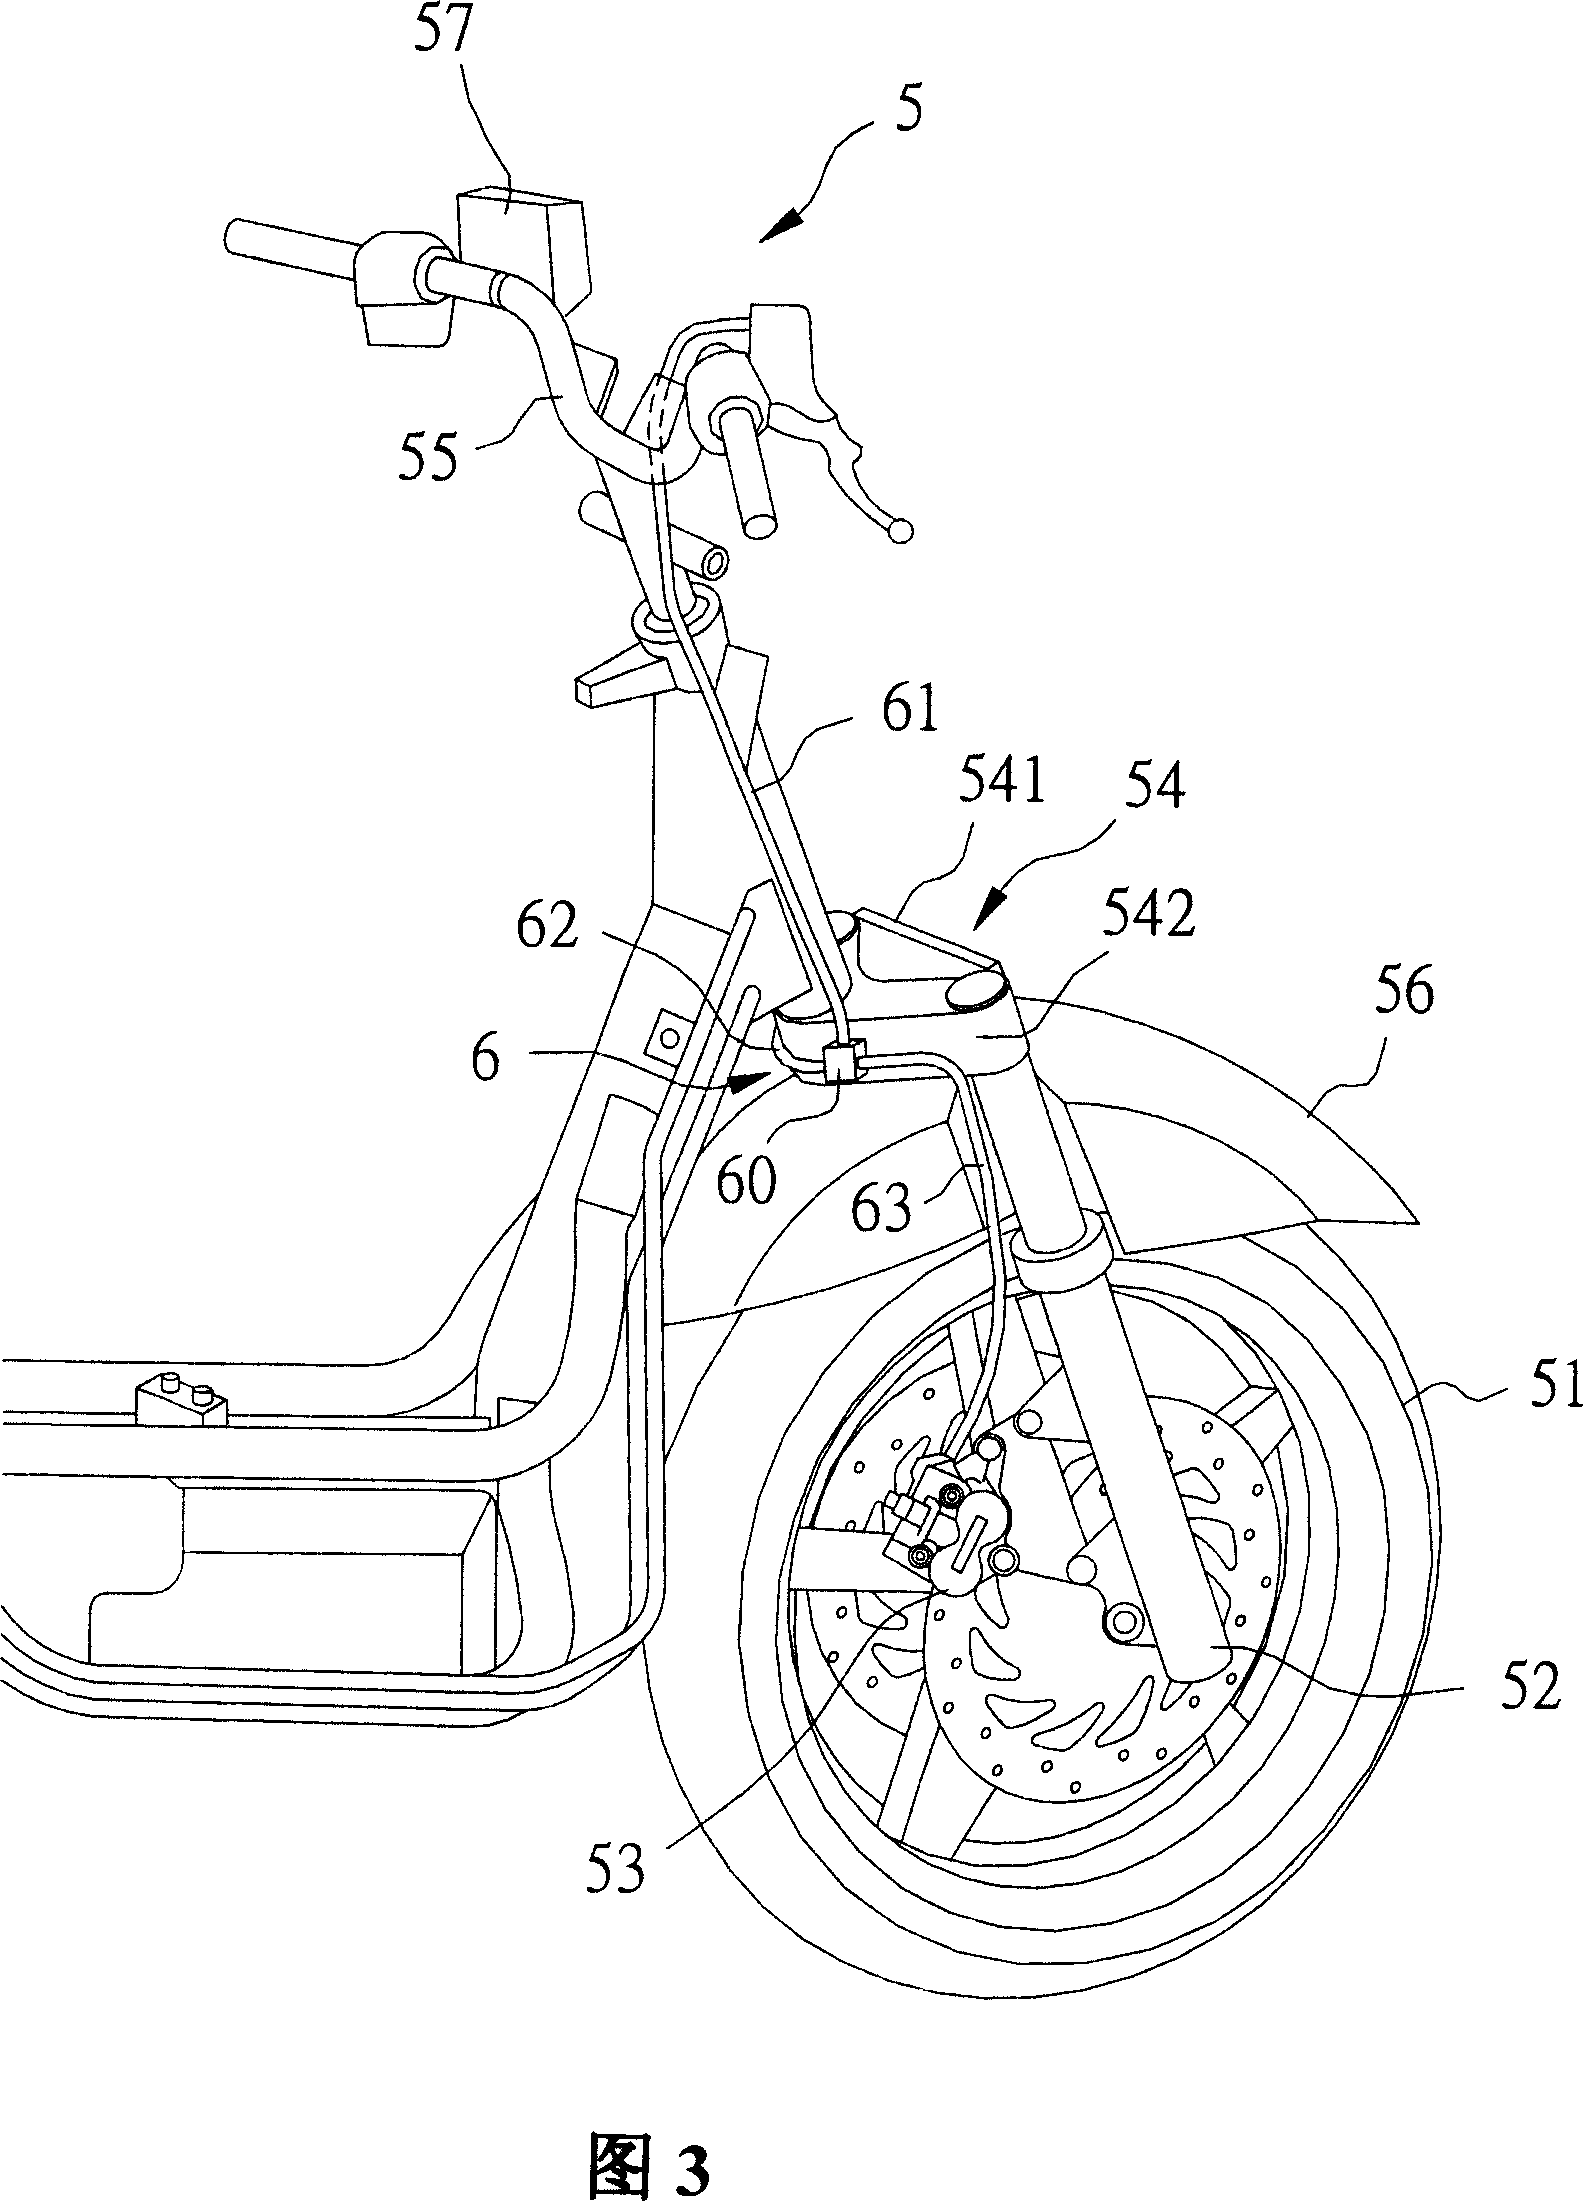 Motorcycle brake oil pipe device